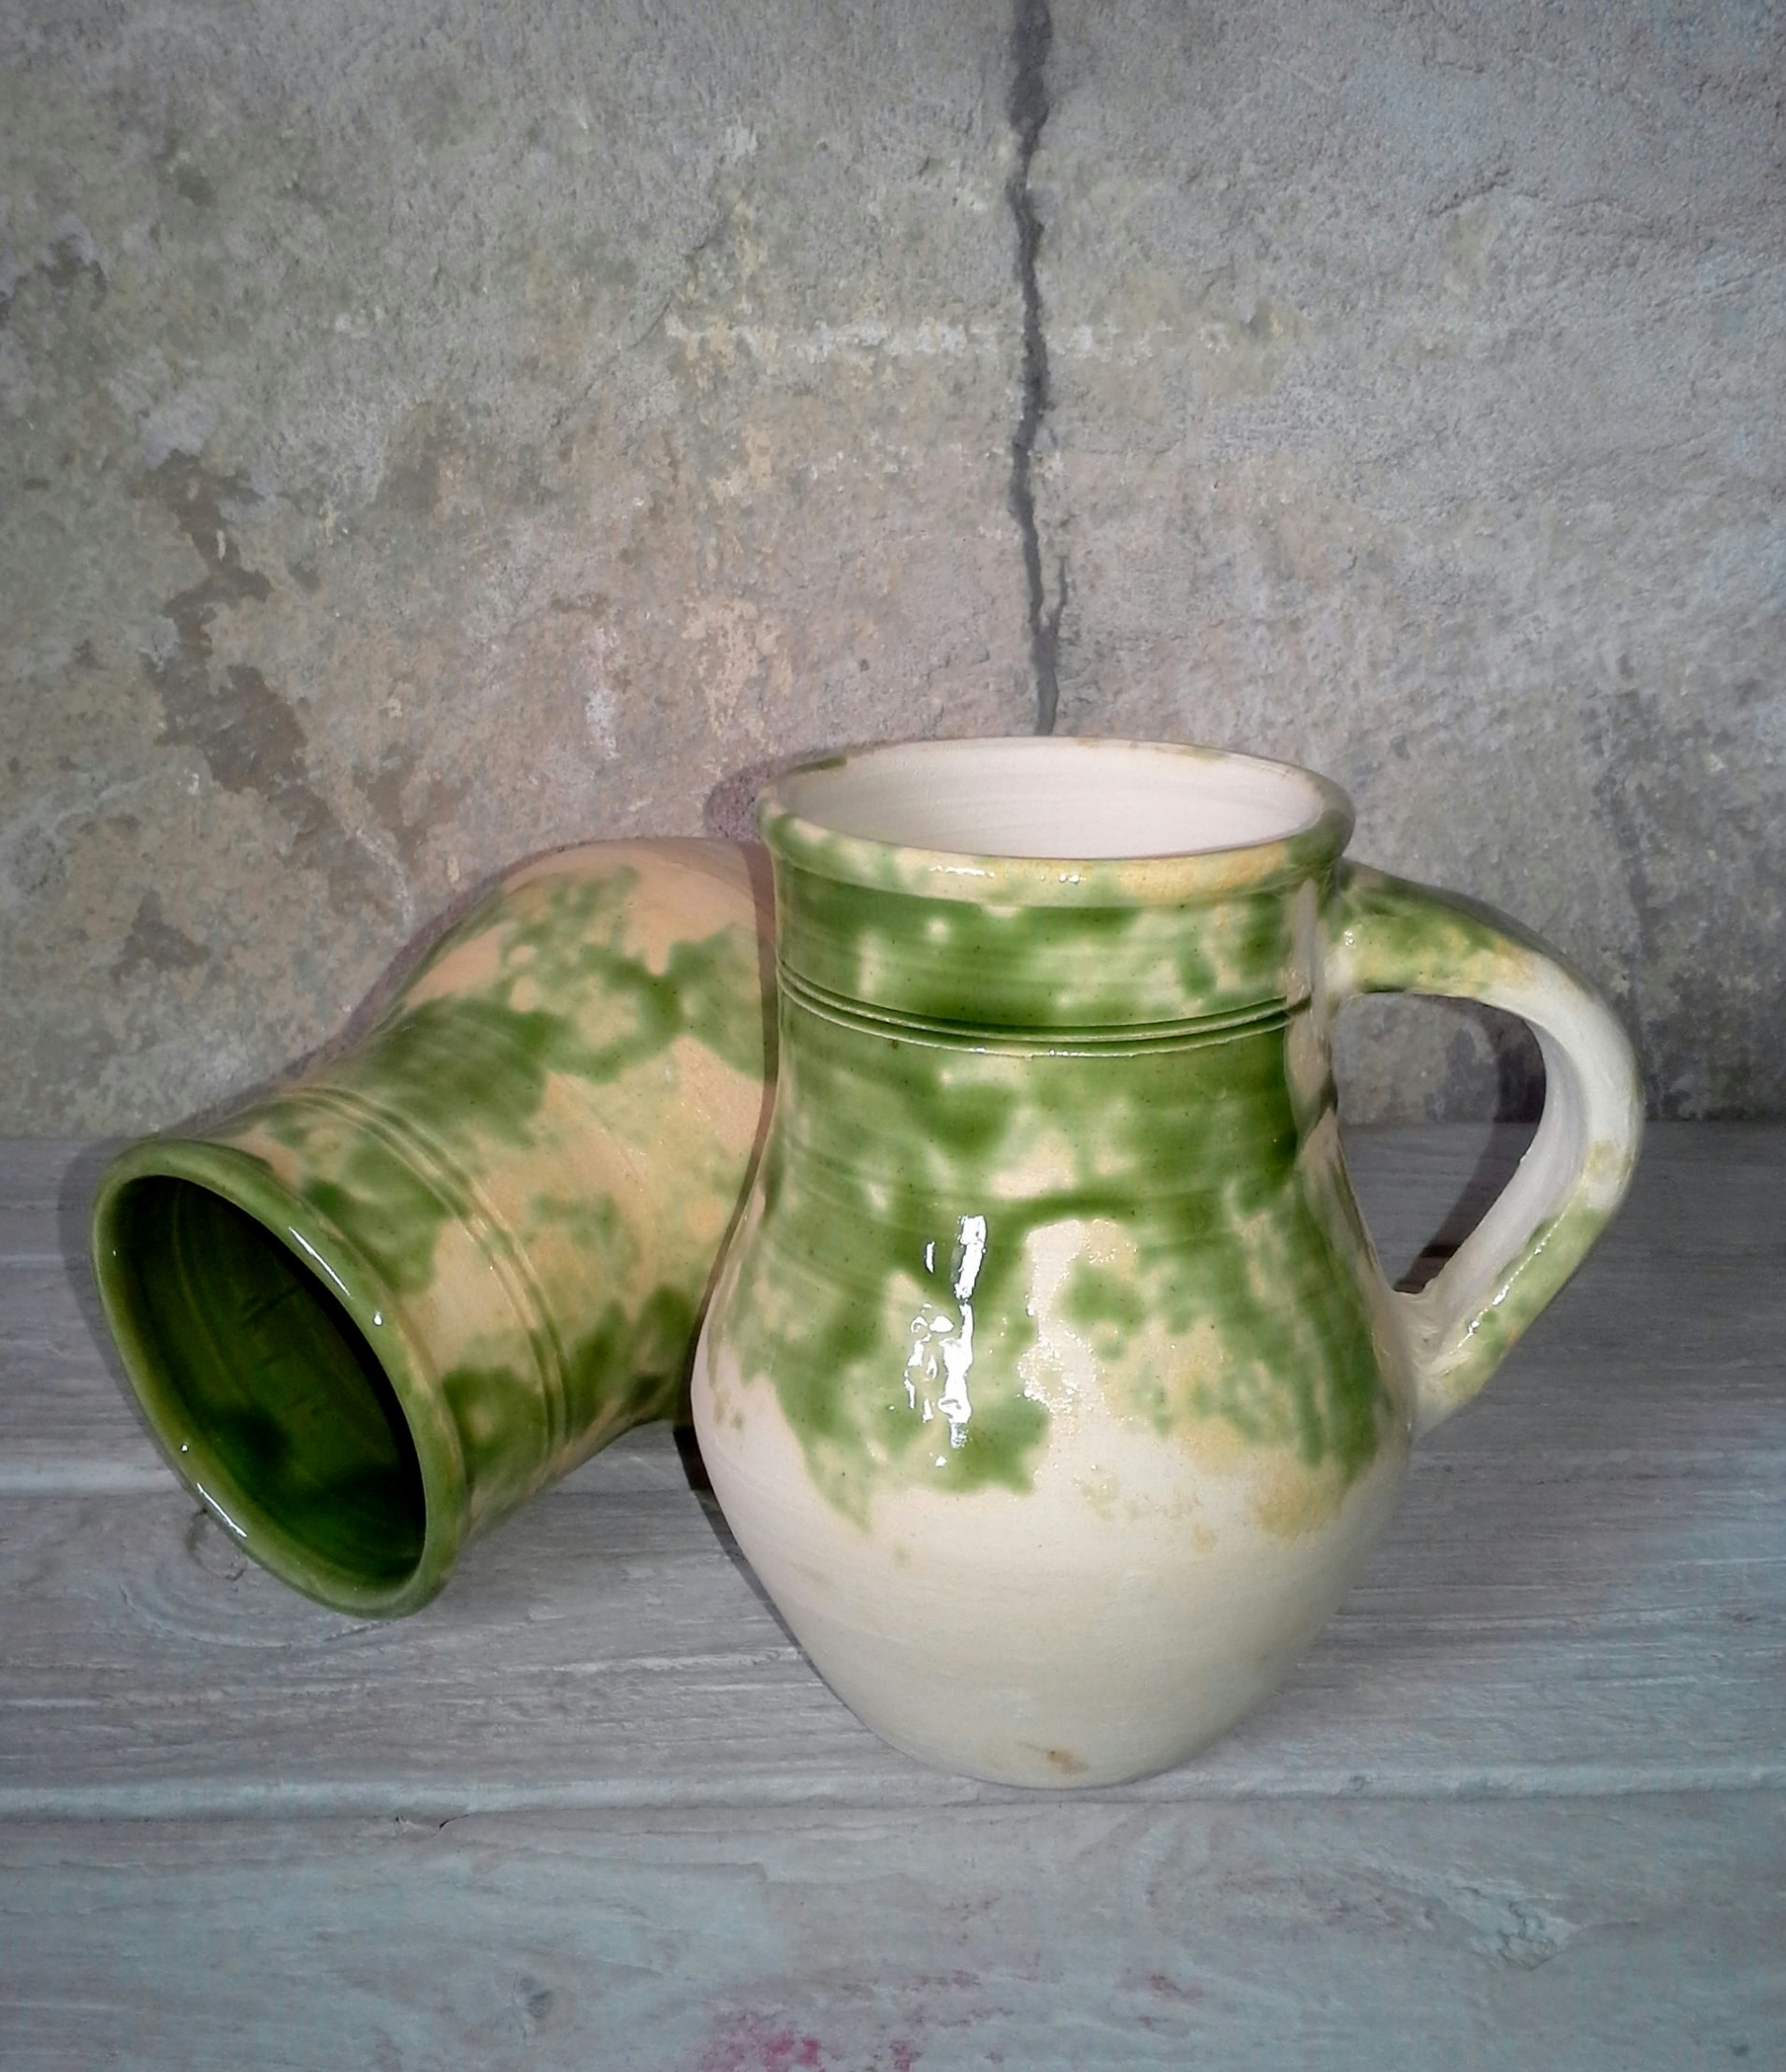 Green jugs